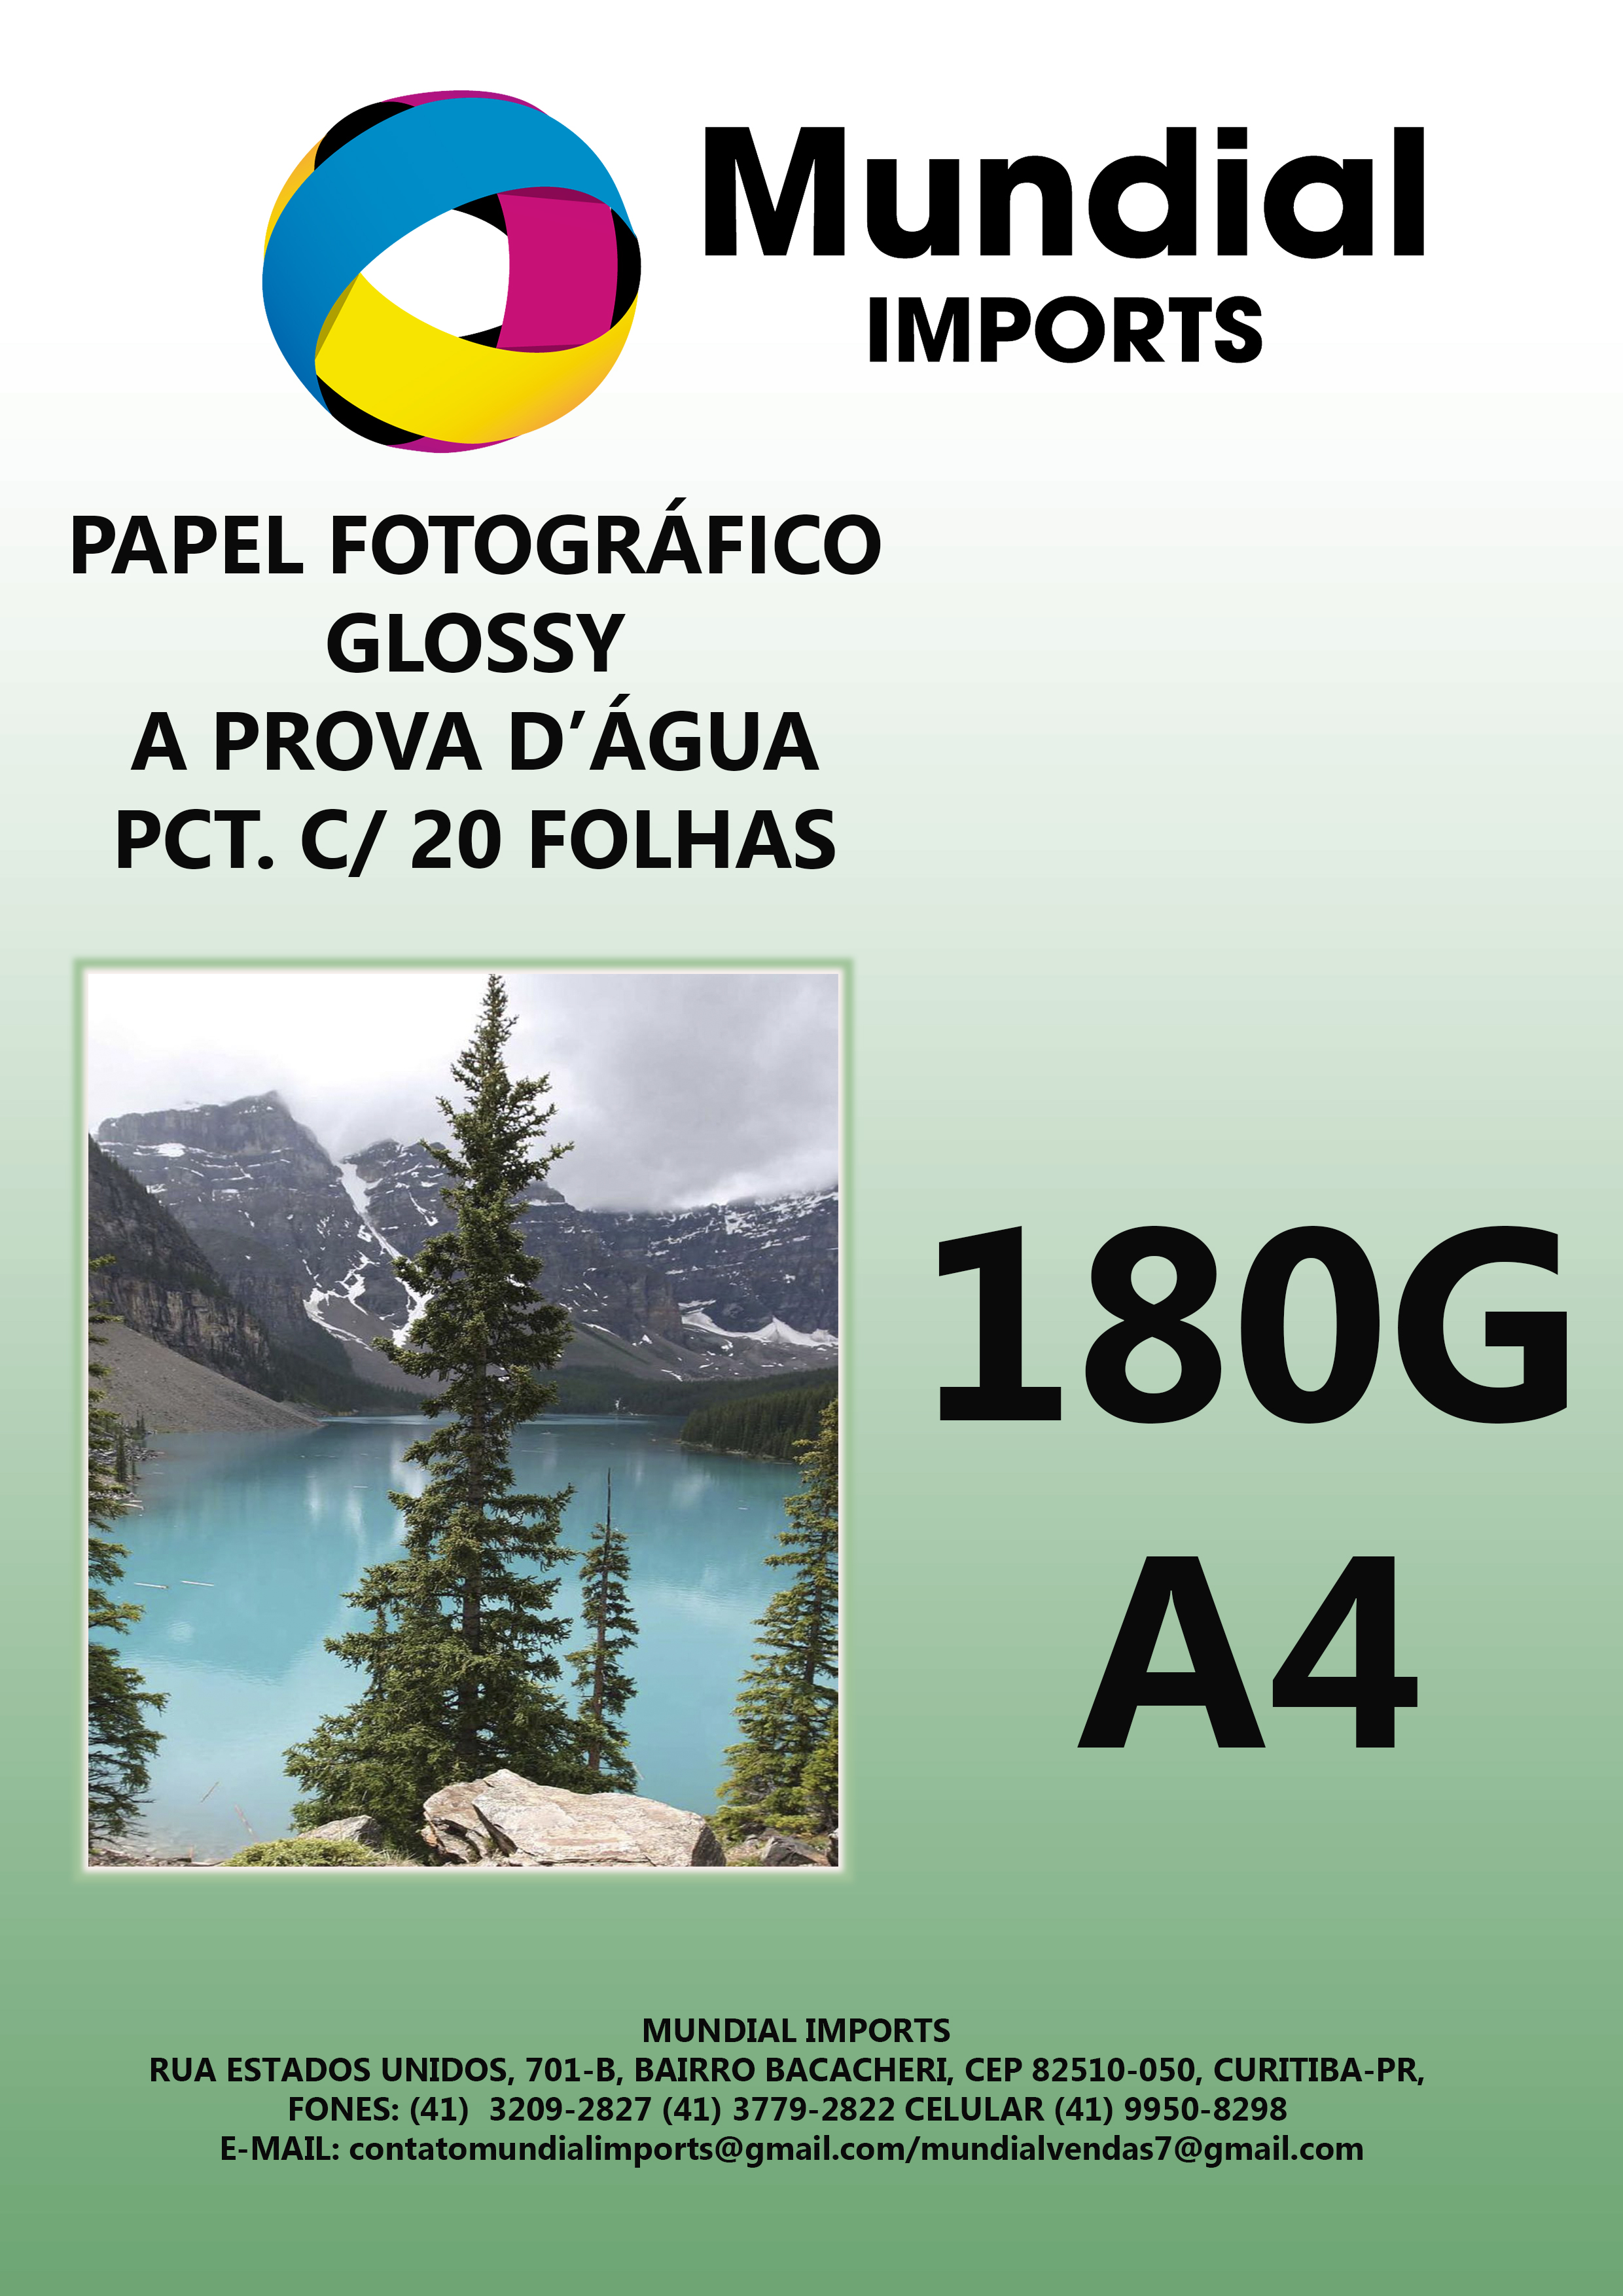 Papel Fotográfico Glossy 180g/A4 - Pacote c/20 folhas